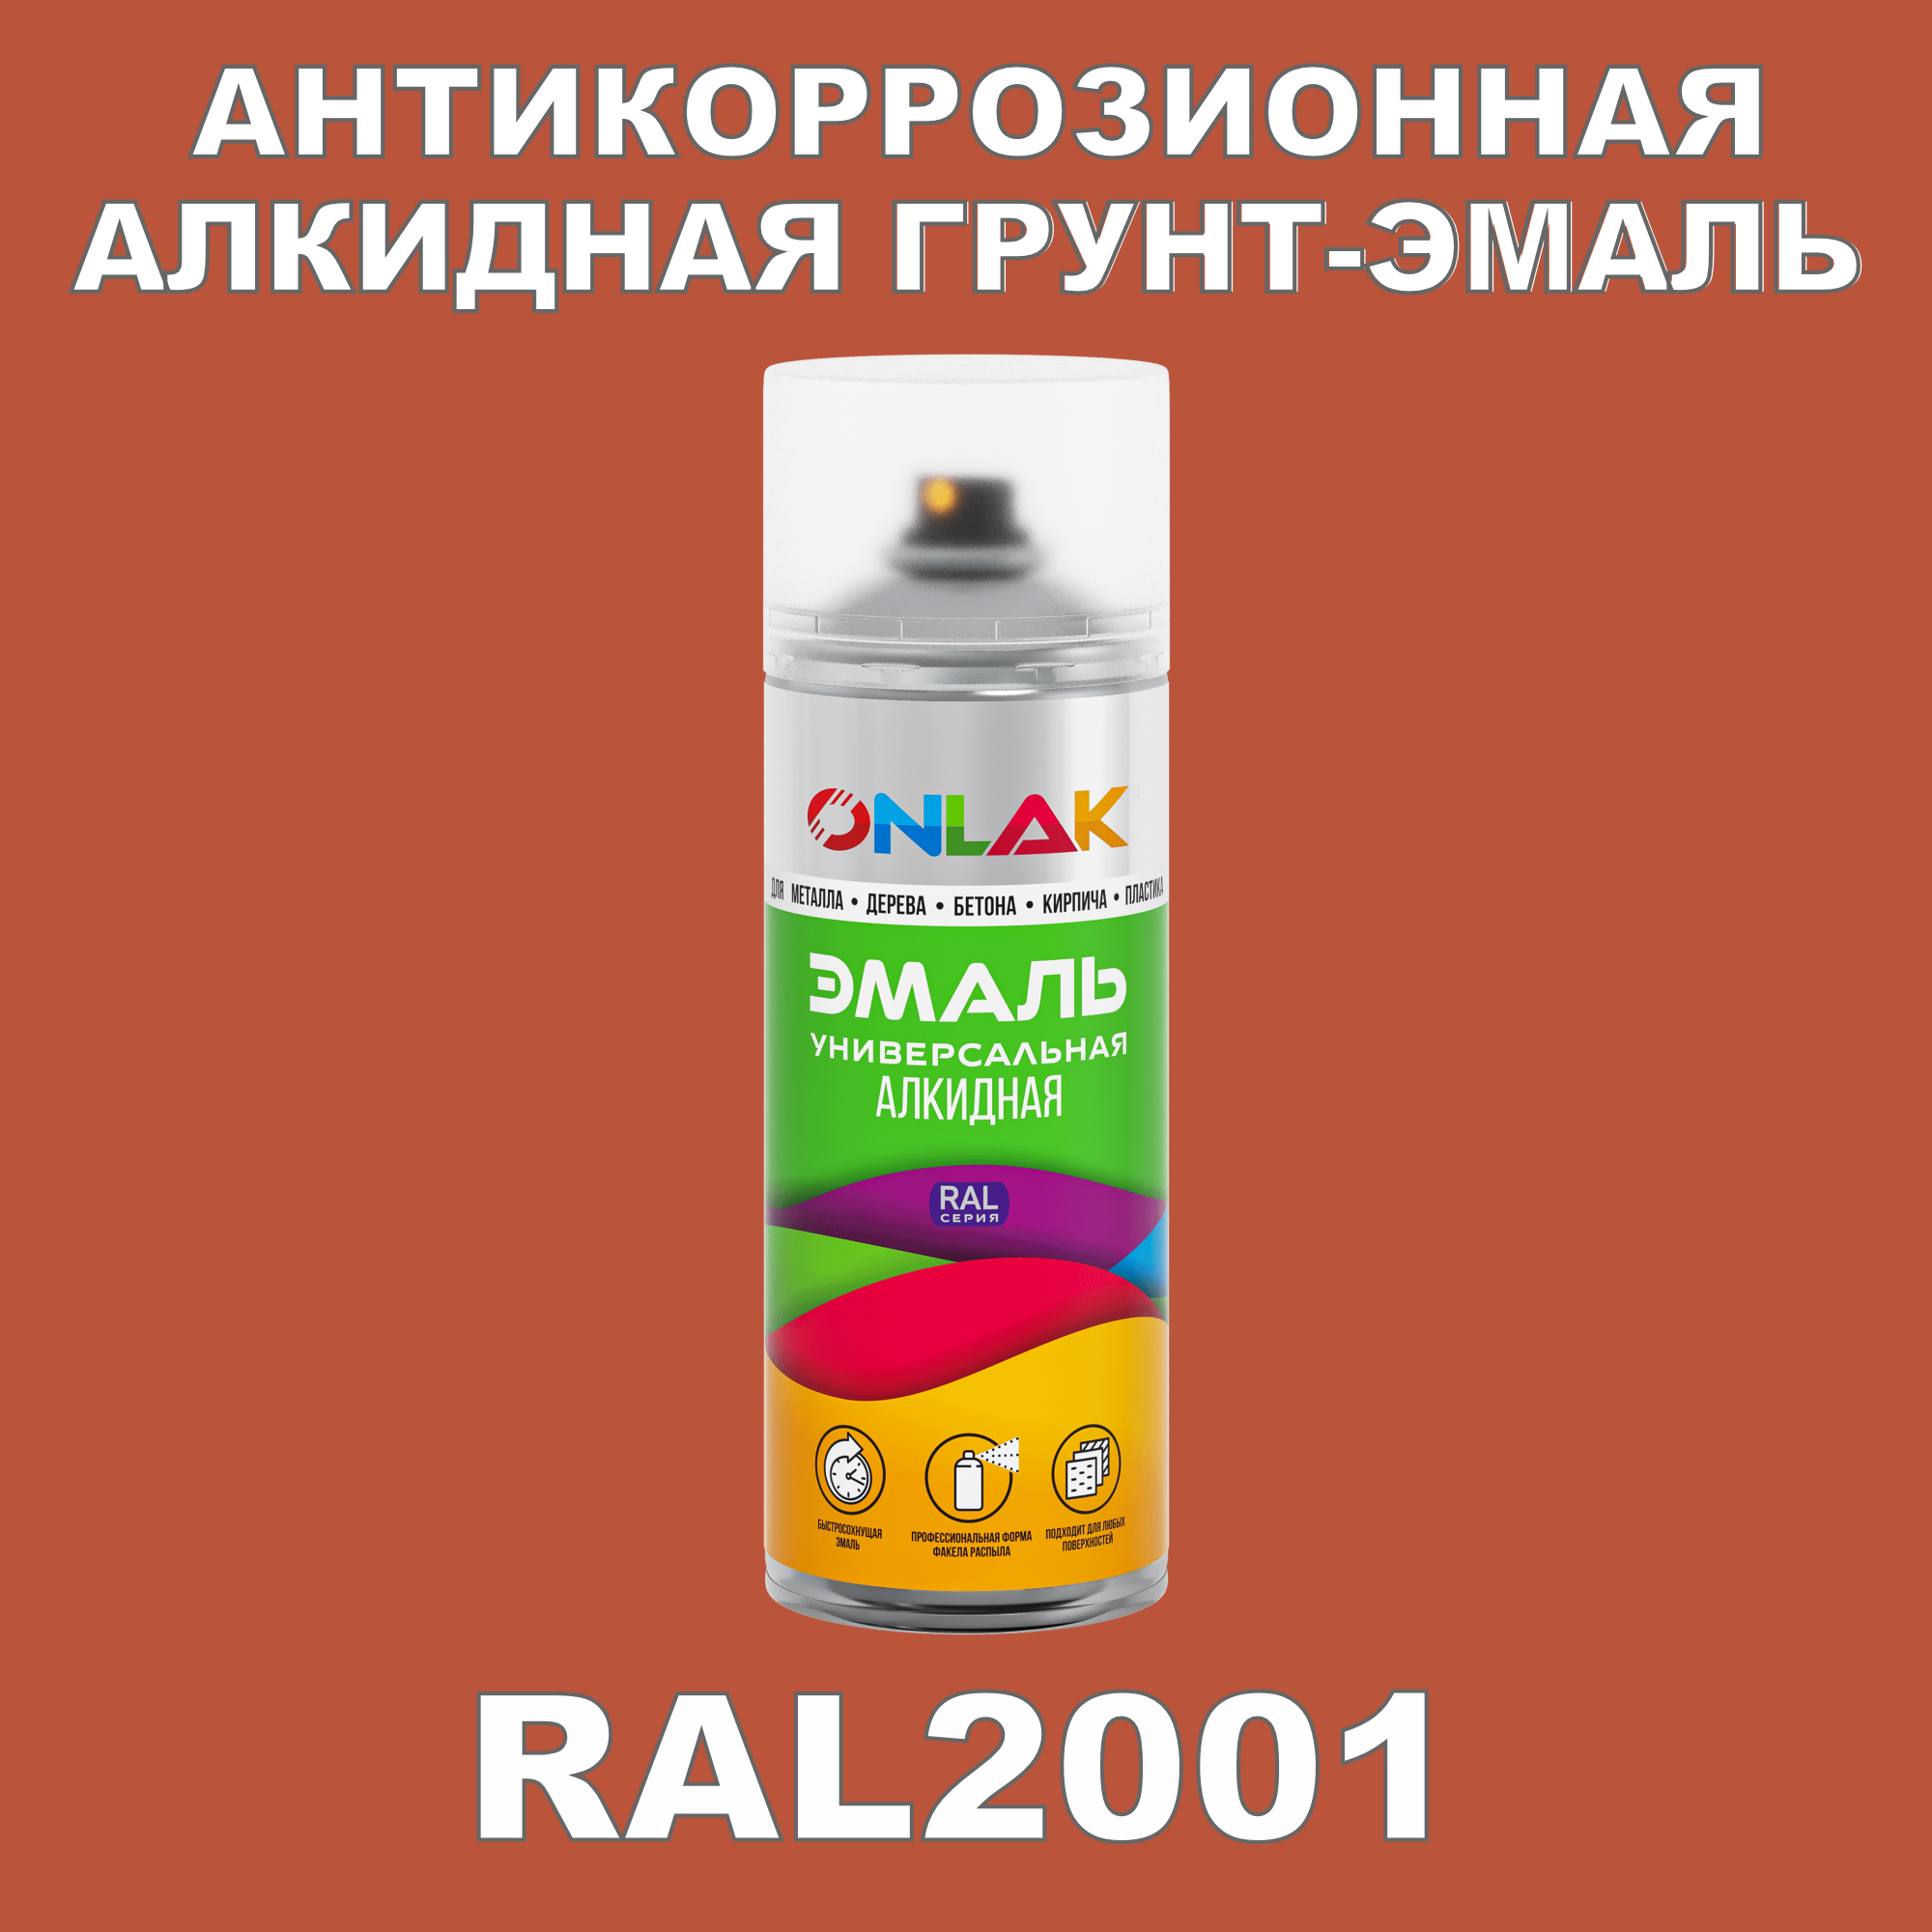 Антикоррозионная грунт-эмаль ONLAK RAL 2001,оранжевый,522 мл